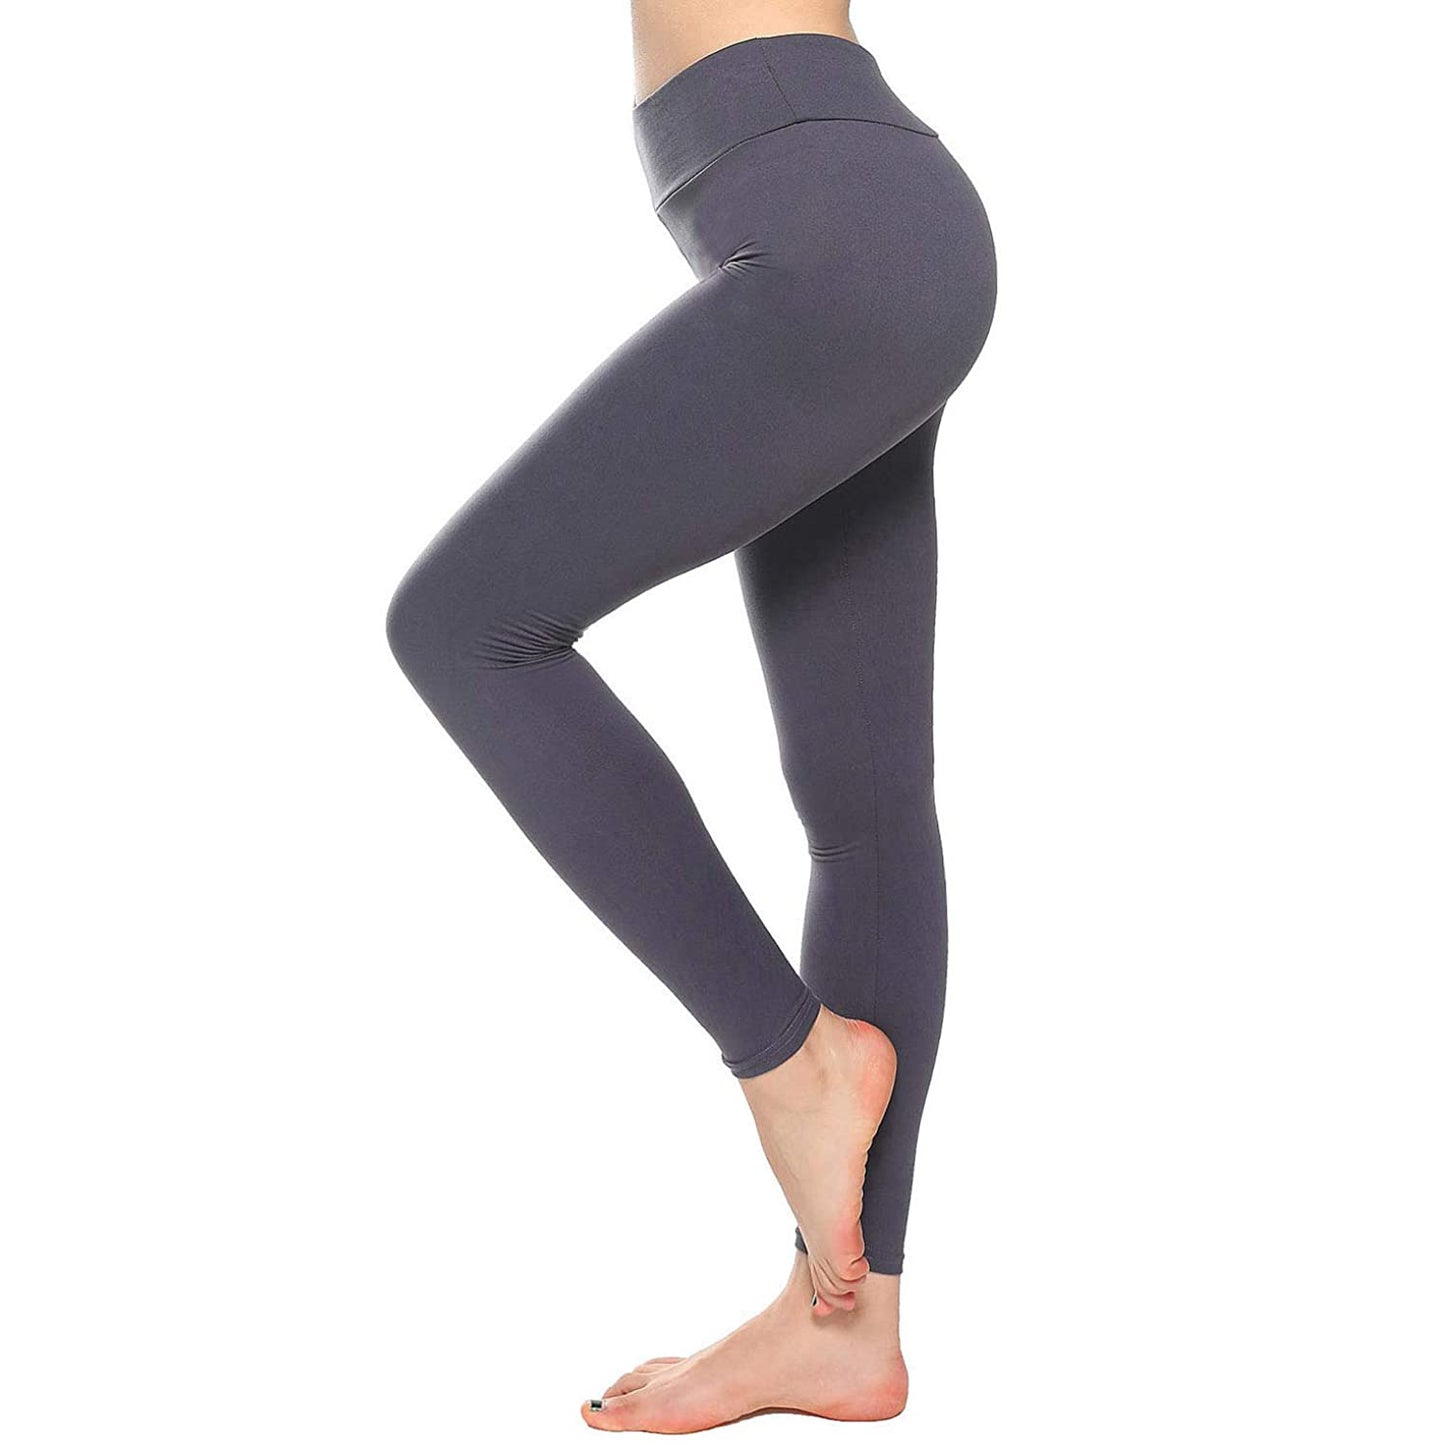 Sinopant Maternity High Waisted Yoga Stretchy Pants Women's Leggings